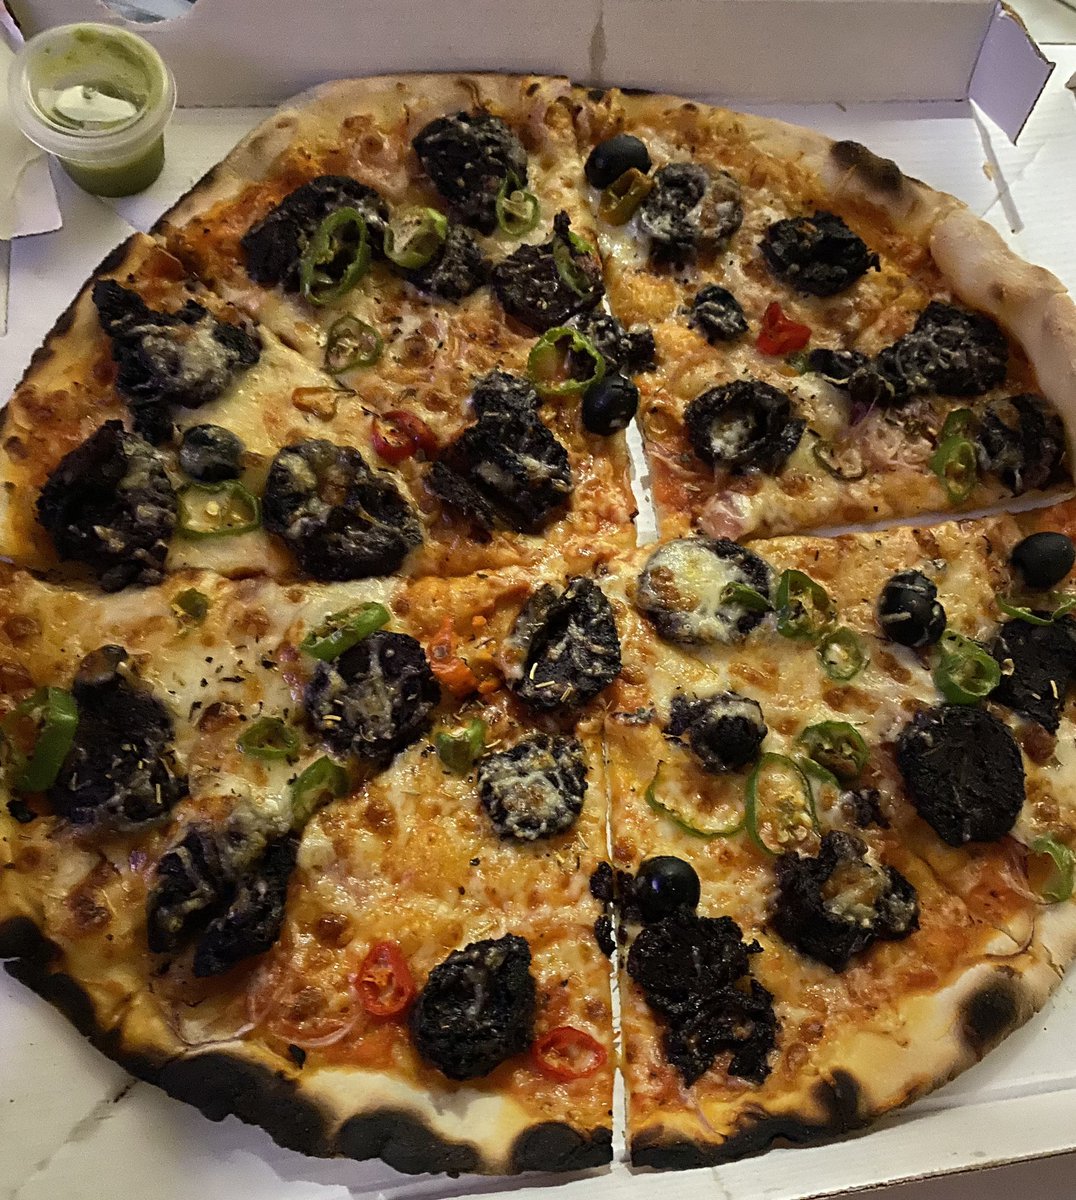 Pizza boudin gros piments 🍕 😍  #team974 #lareunion #pizza